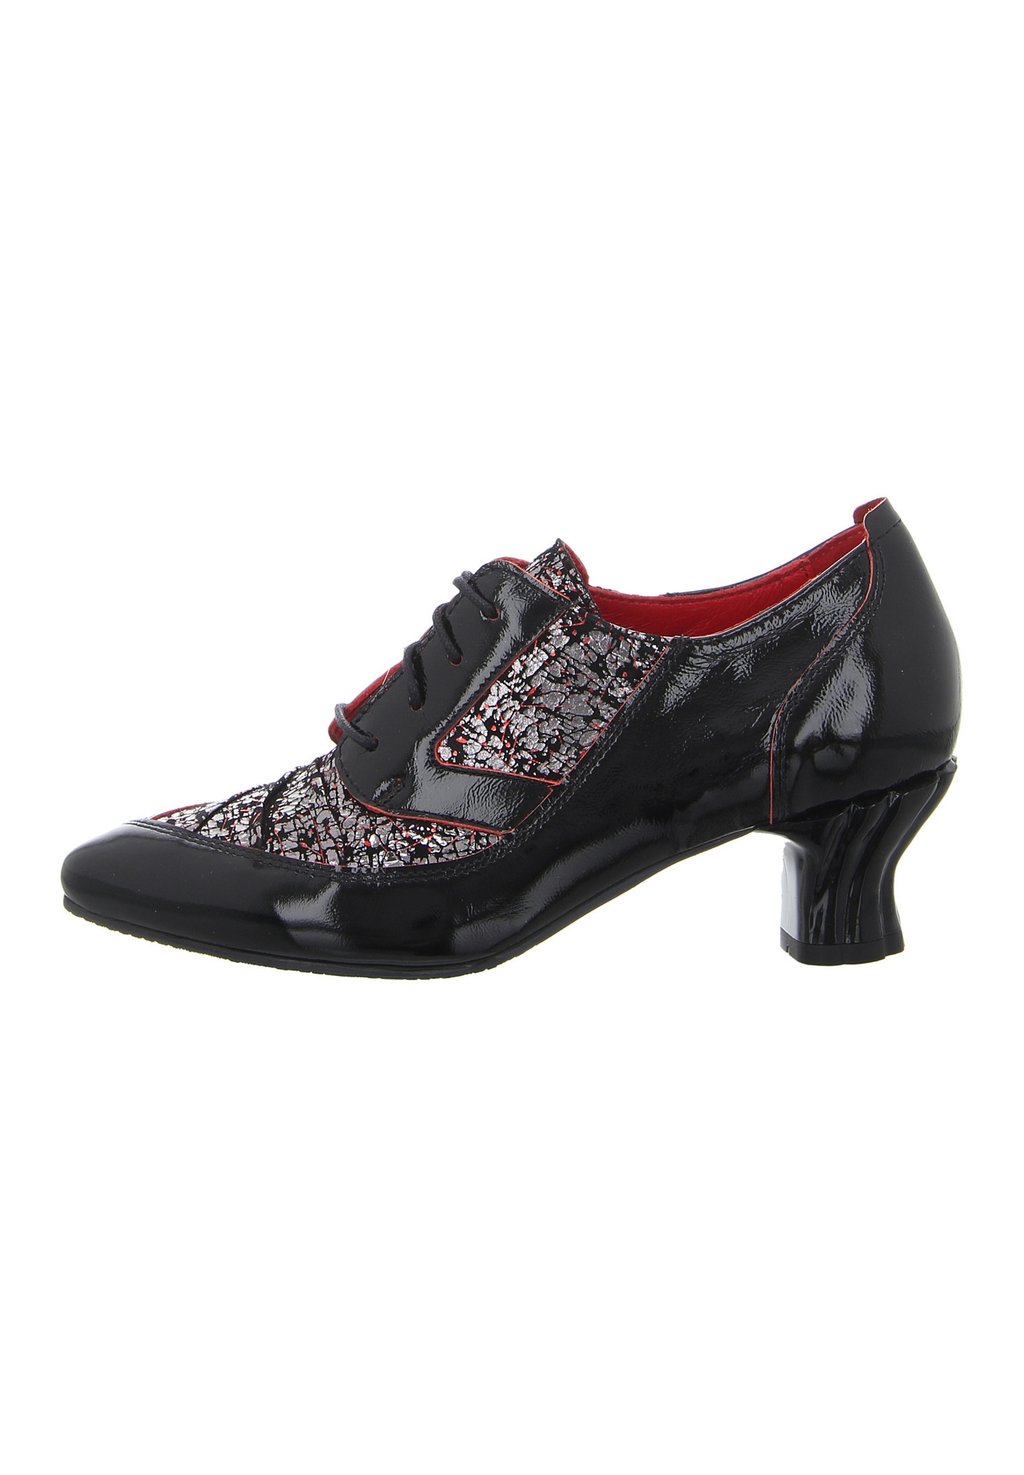 Туфли на шнуровке Simen, цвет schwarz rot